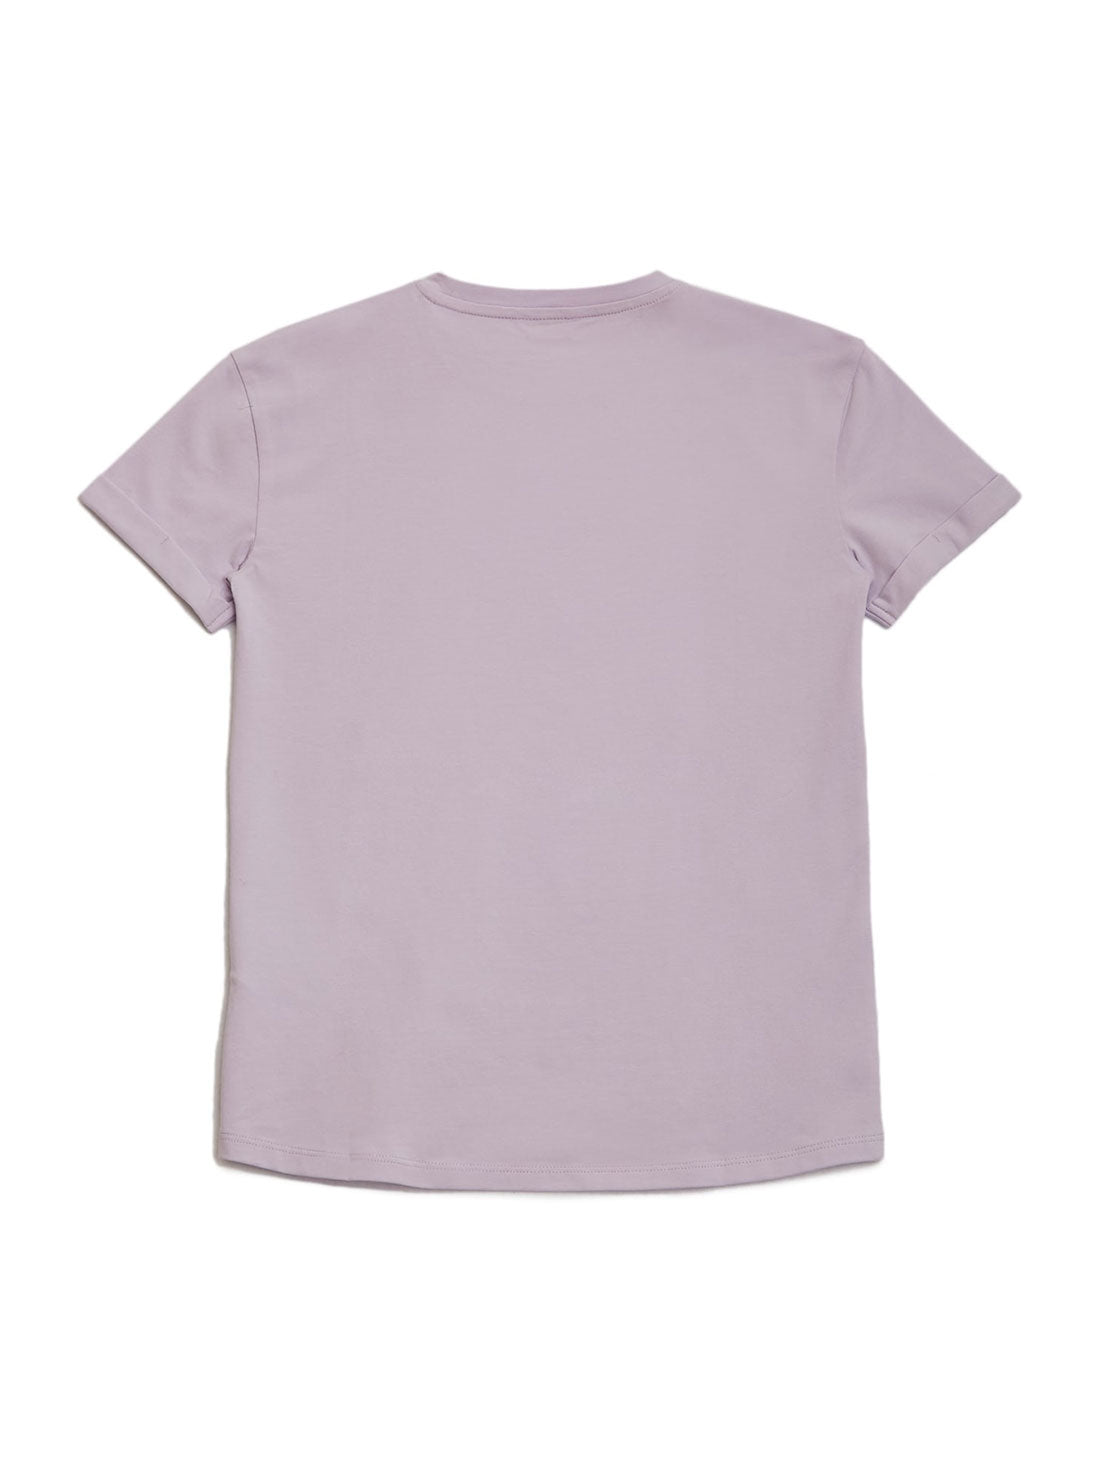 Purple Reversible Sequin Logo T-Shirt (7-16)